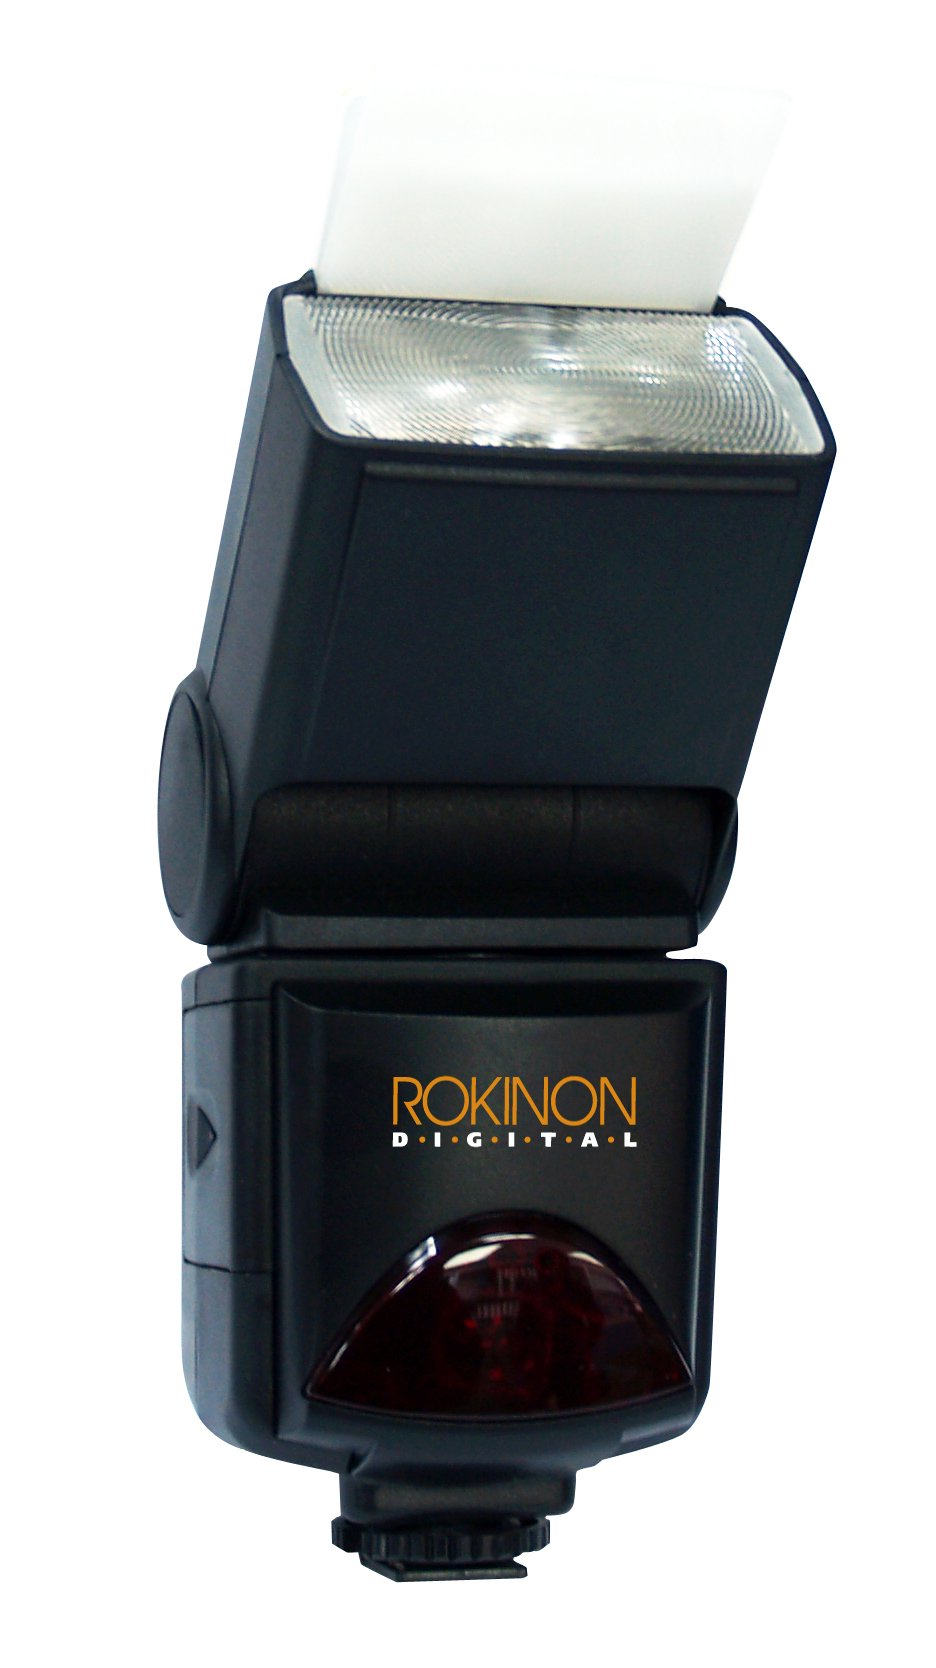 Rokinon D980AFZ-N Digital TTL Power Zoom Flash for Nikon (Black)